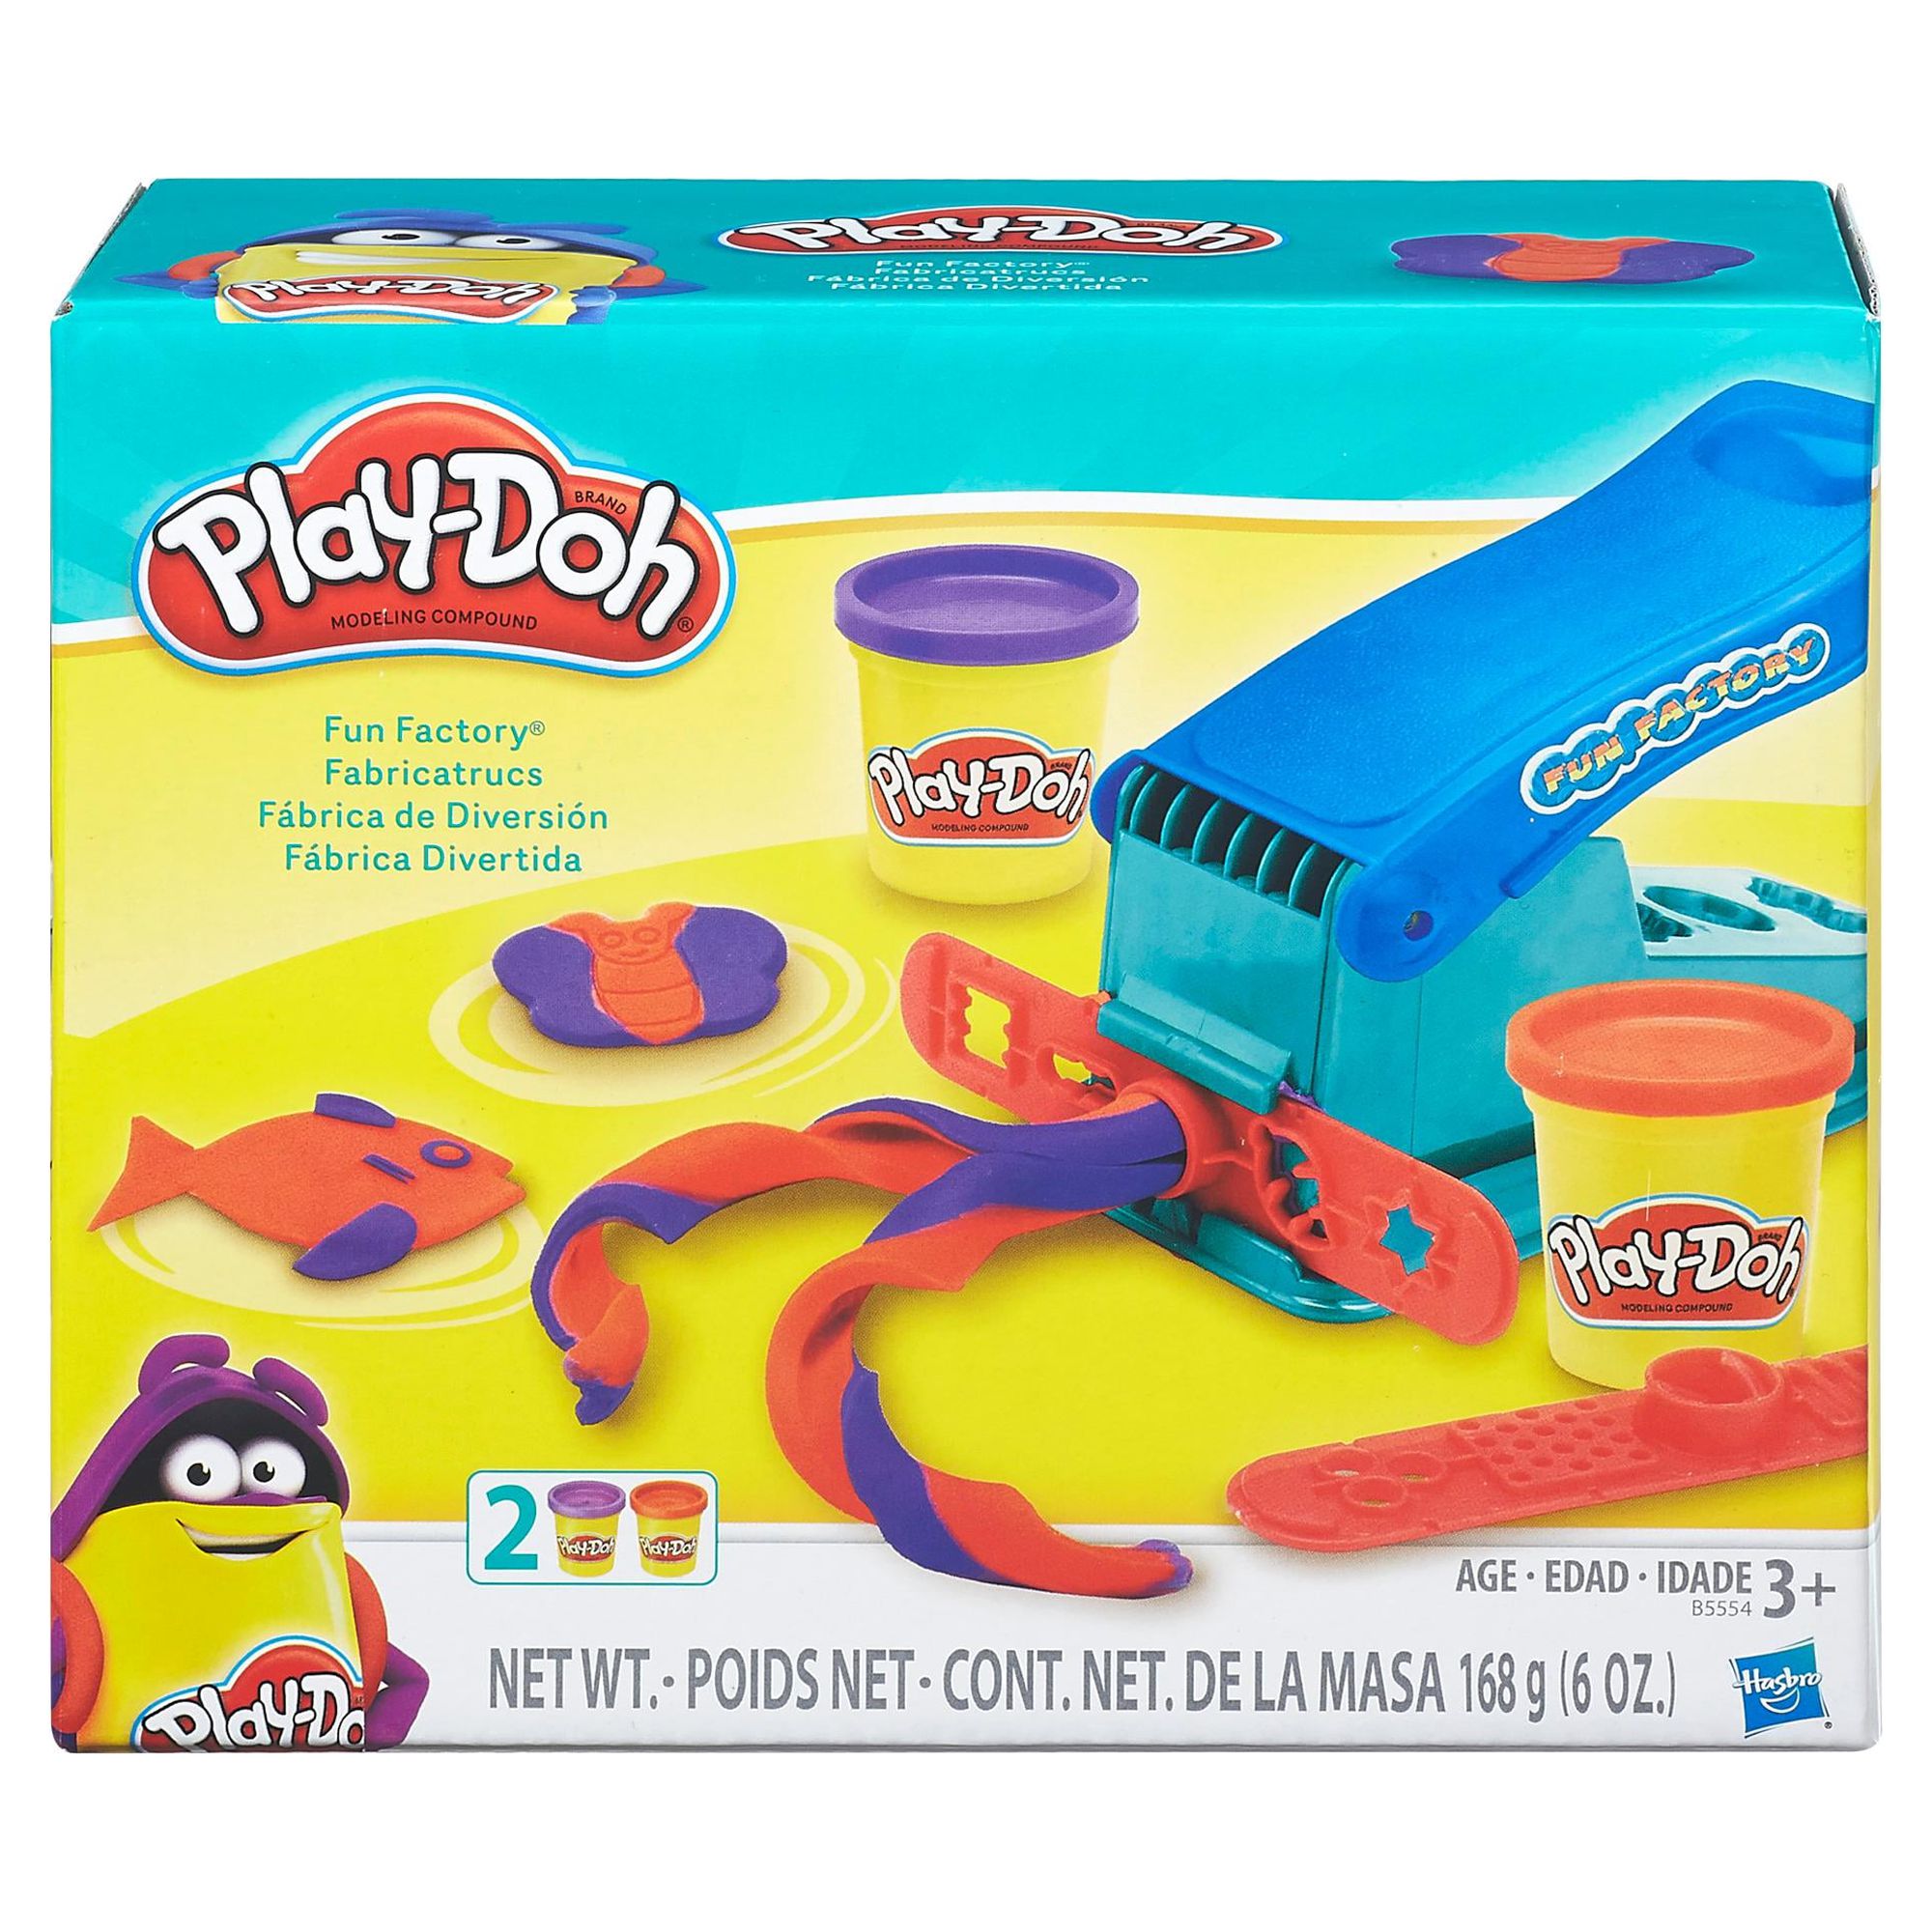 Play-Doh Fun Factory Set - image 2 of 2